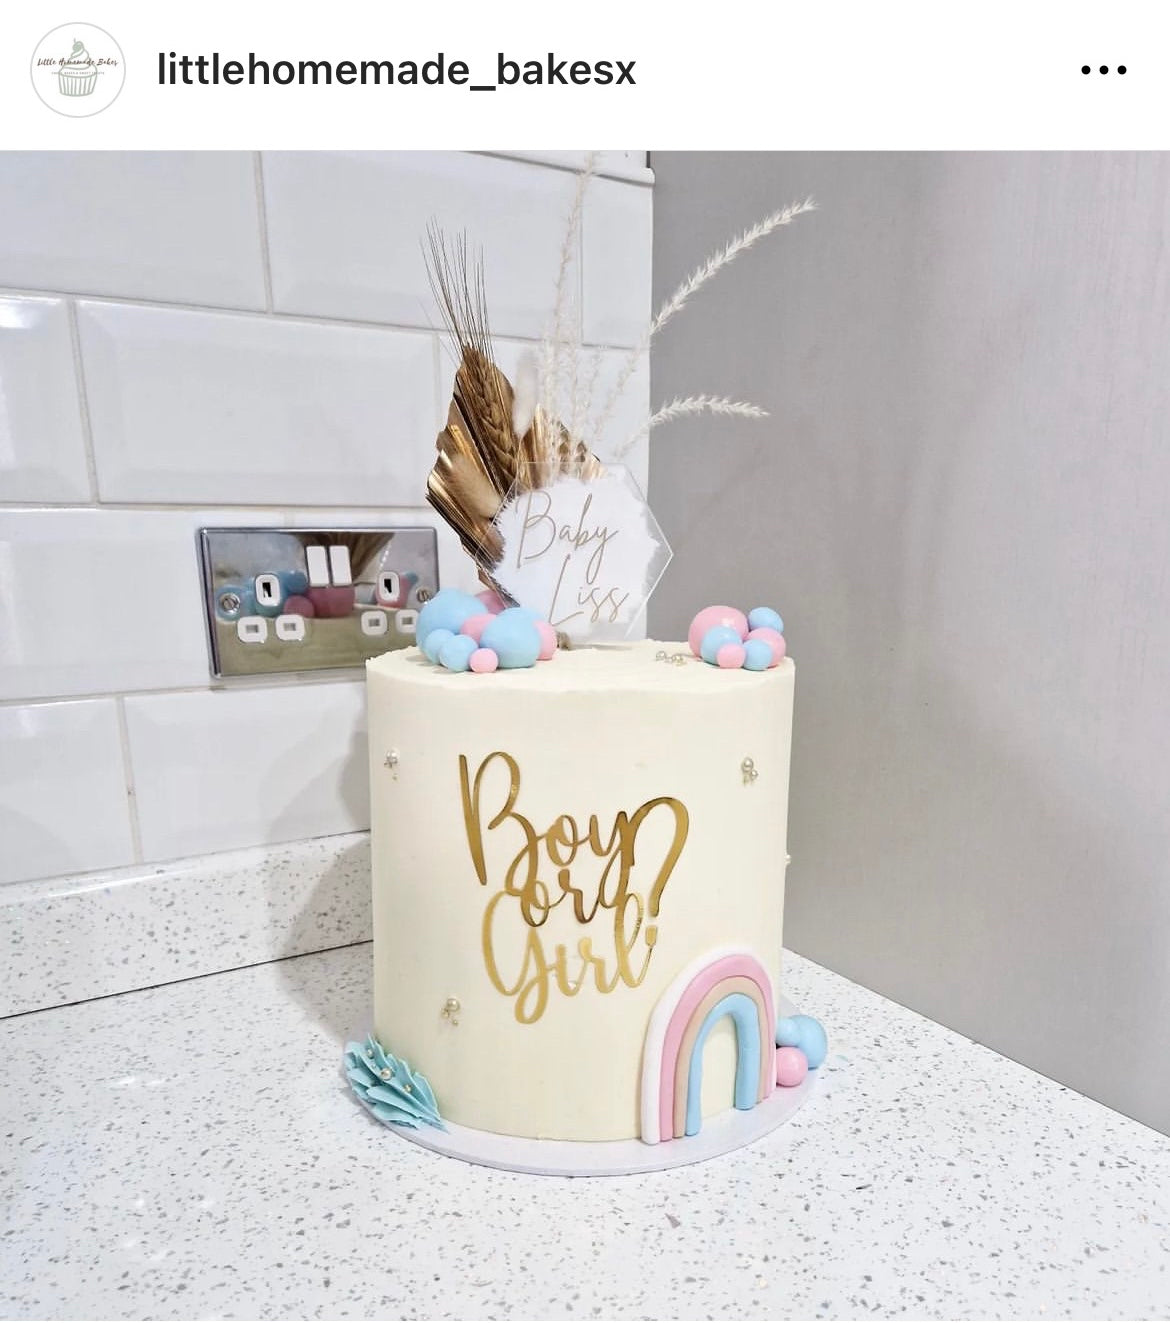 Boy or girl Cake charm